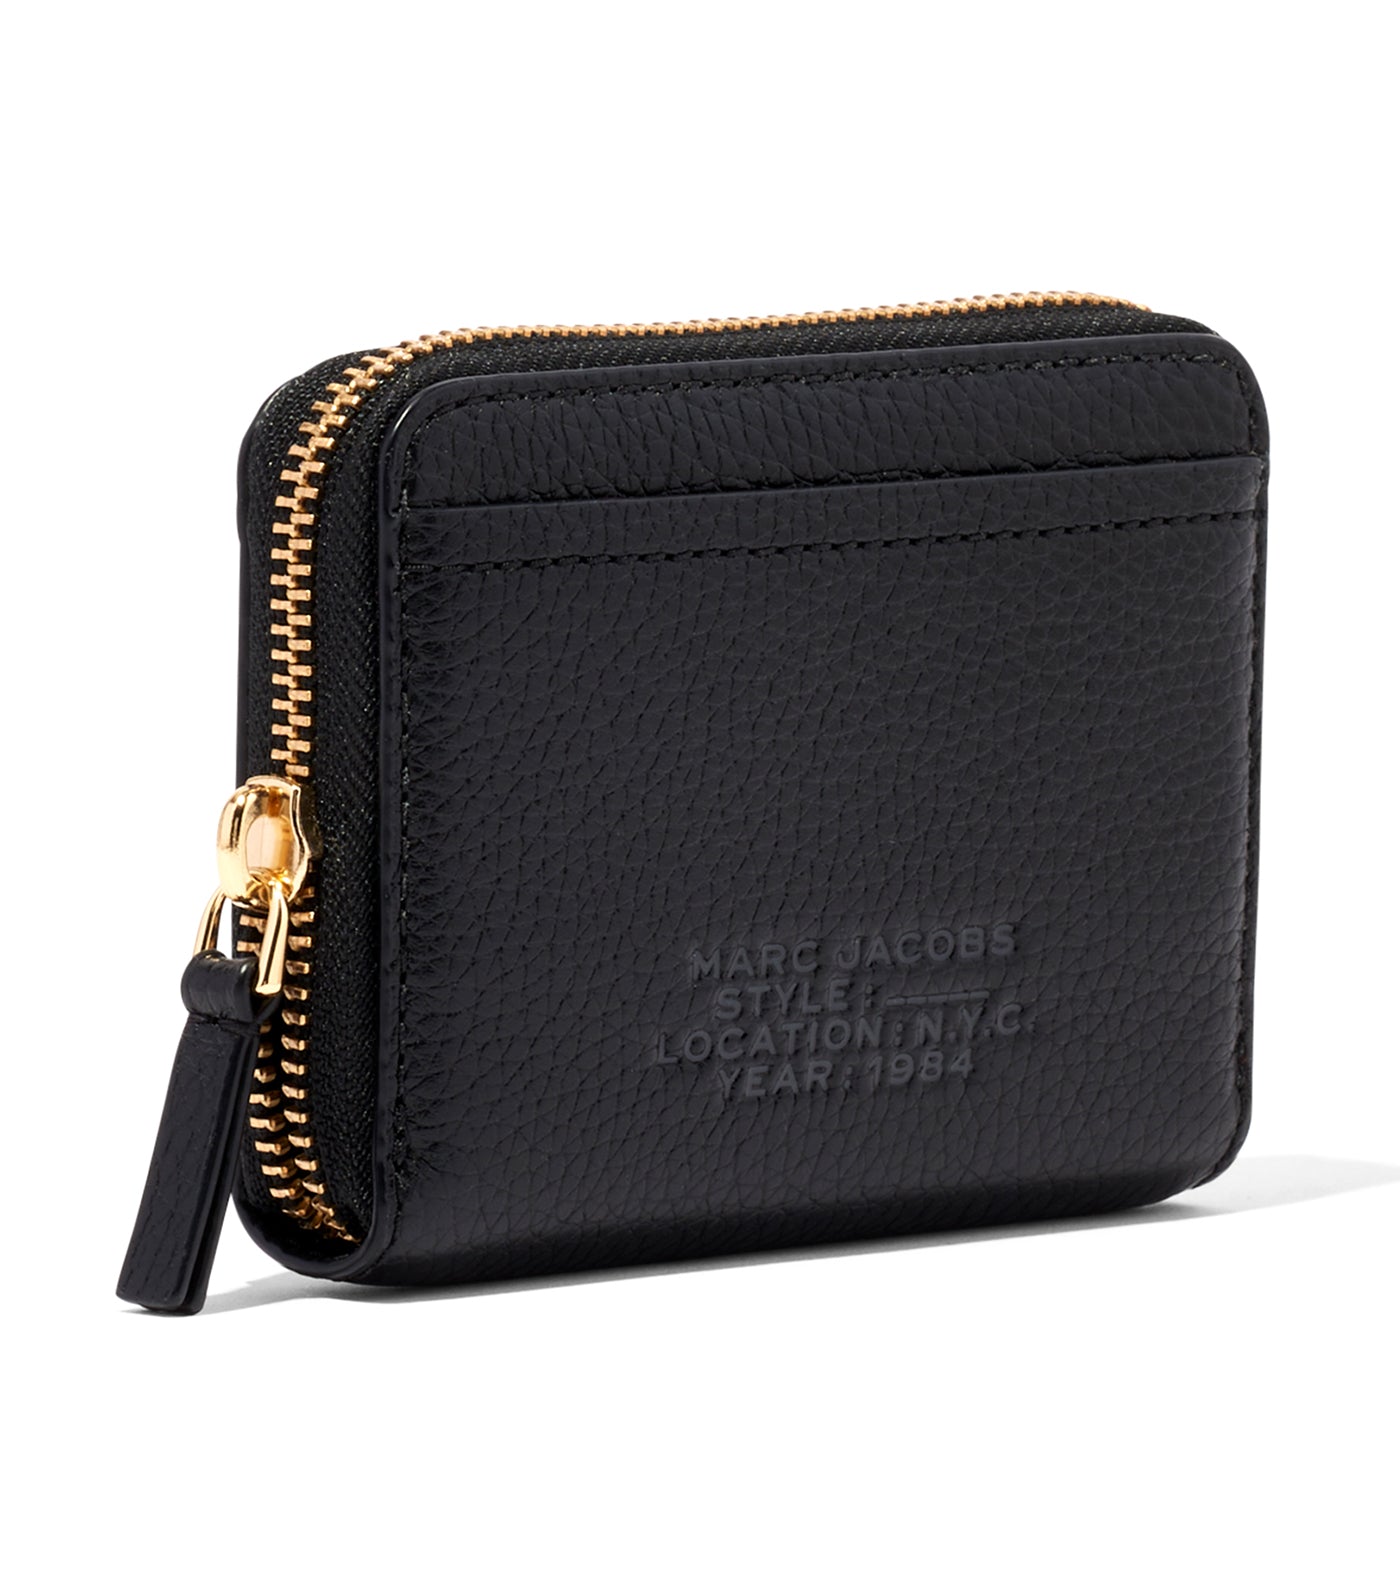 The Leather Zip Around Wallet Black